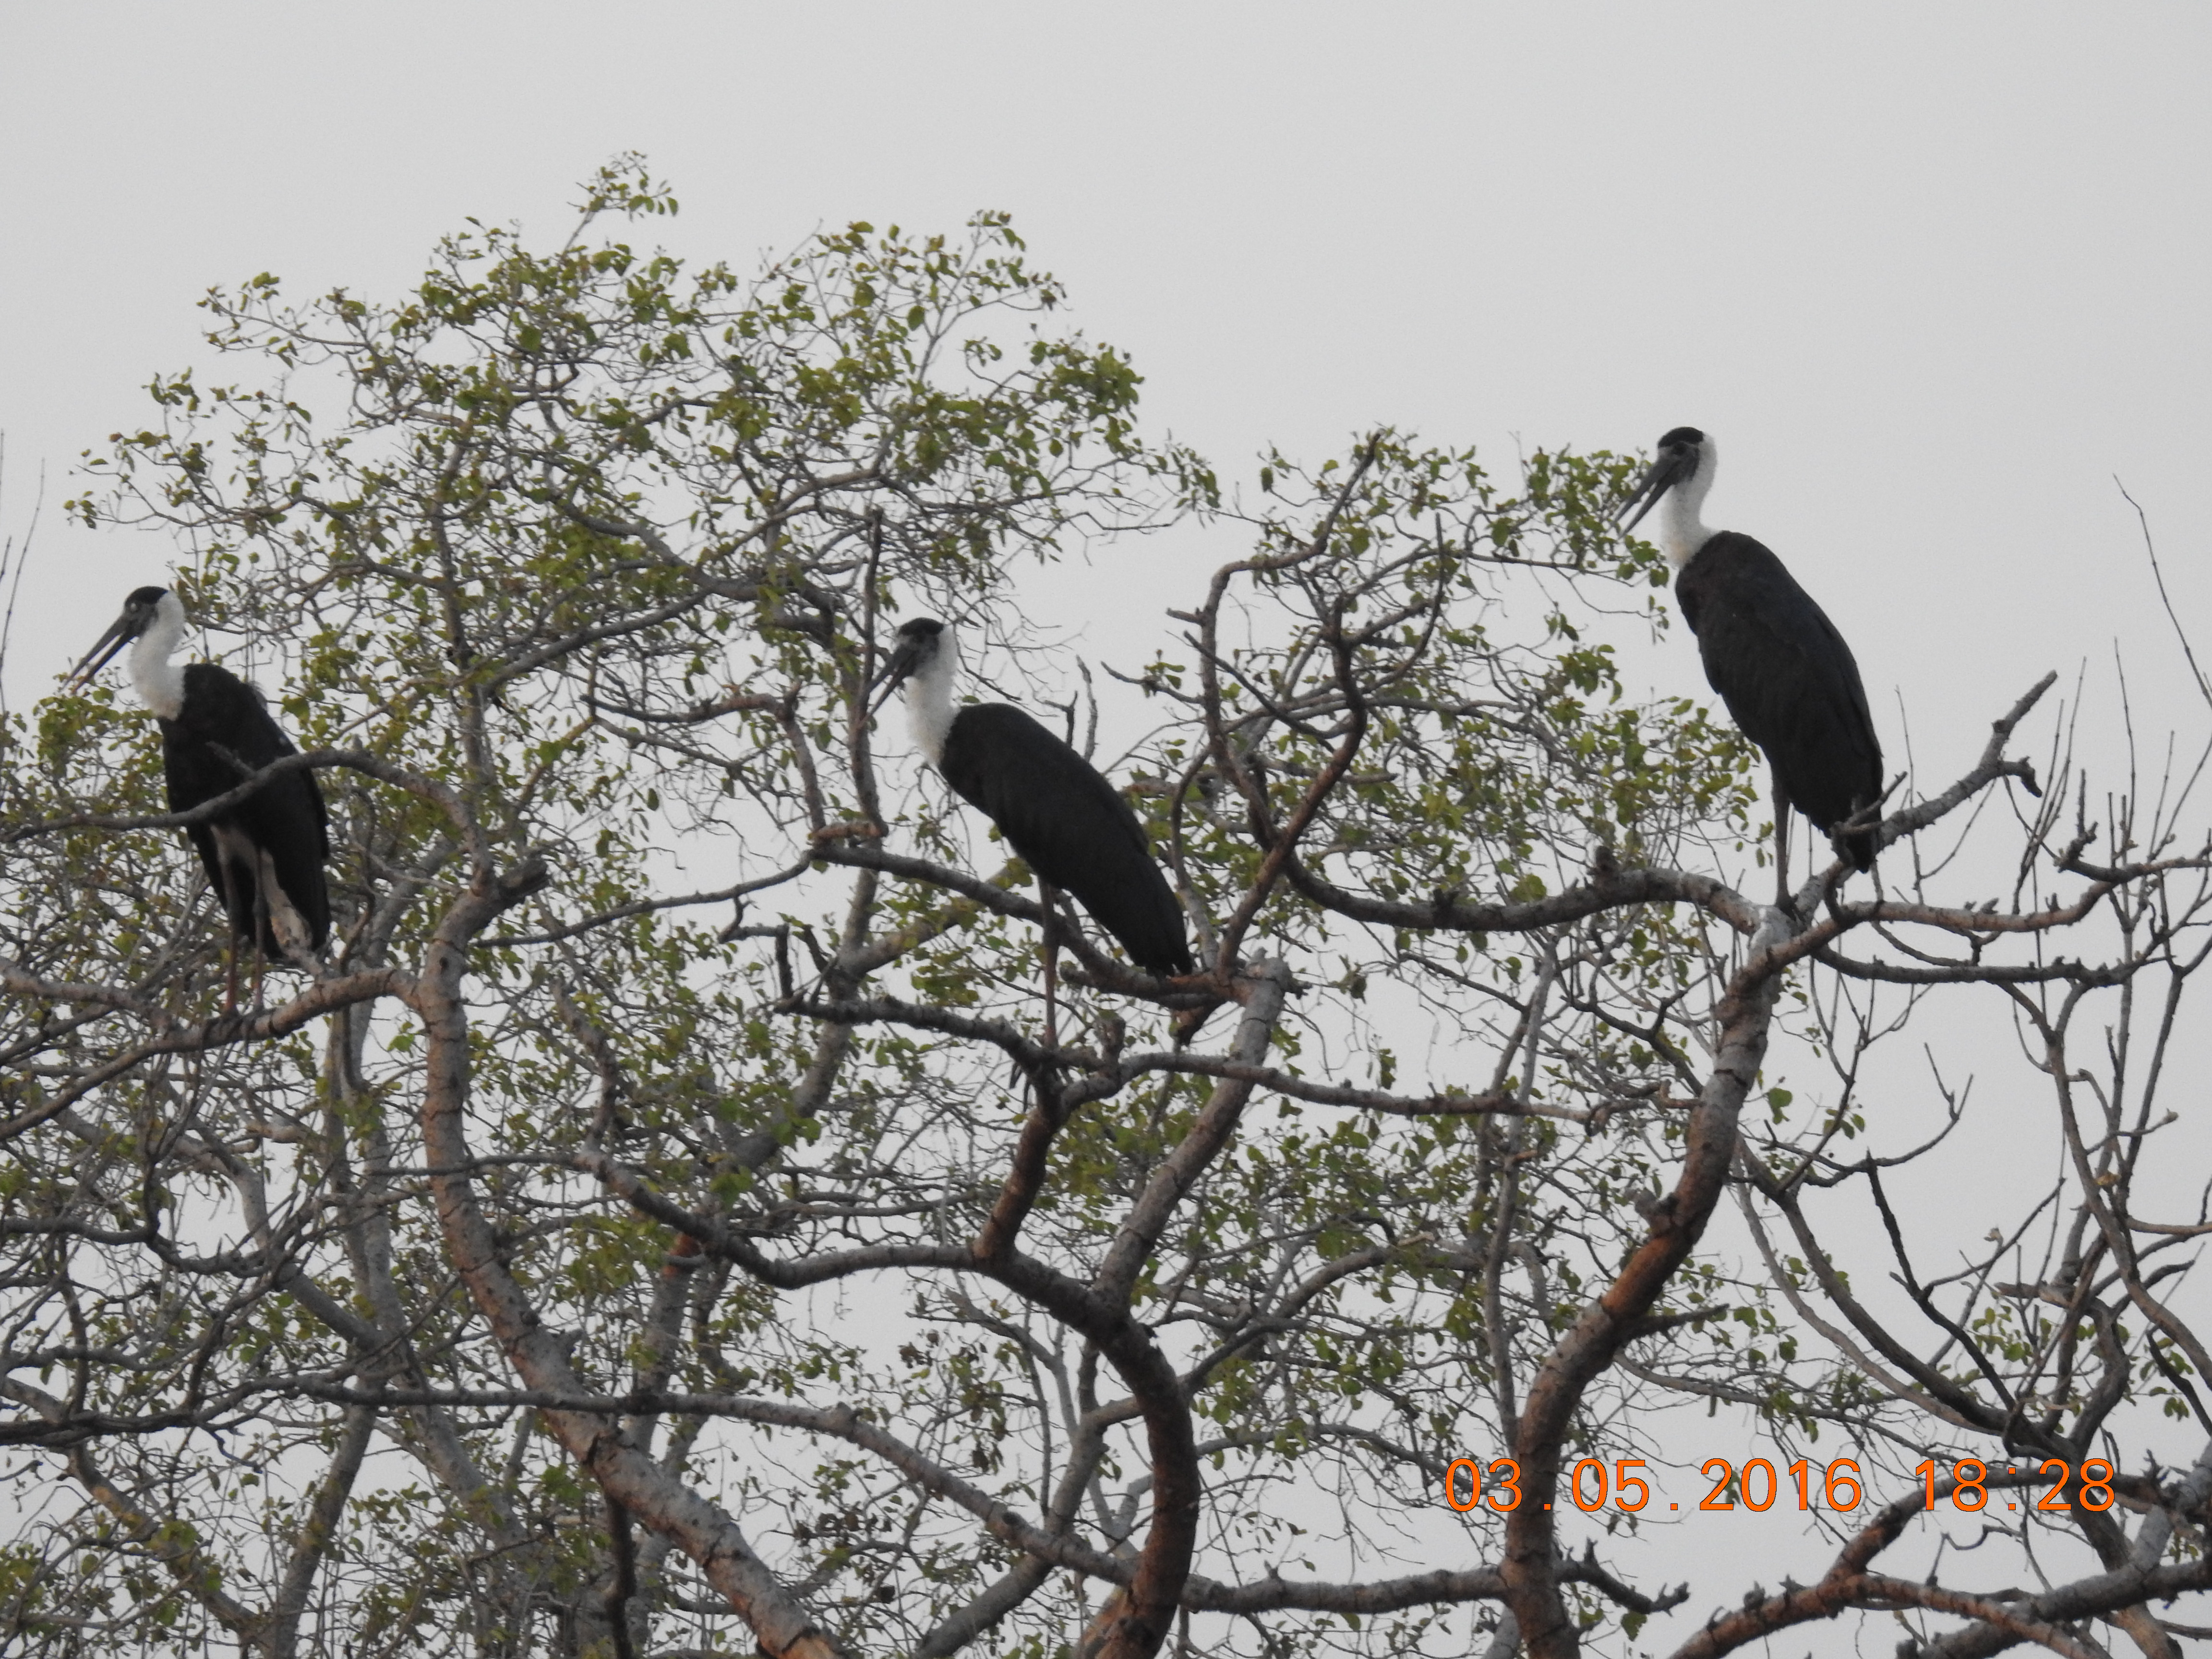 Tipeshwar Bird Sanctuary